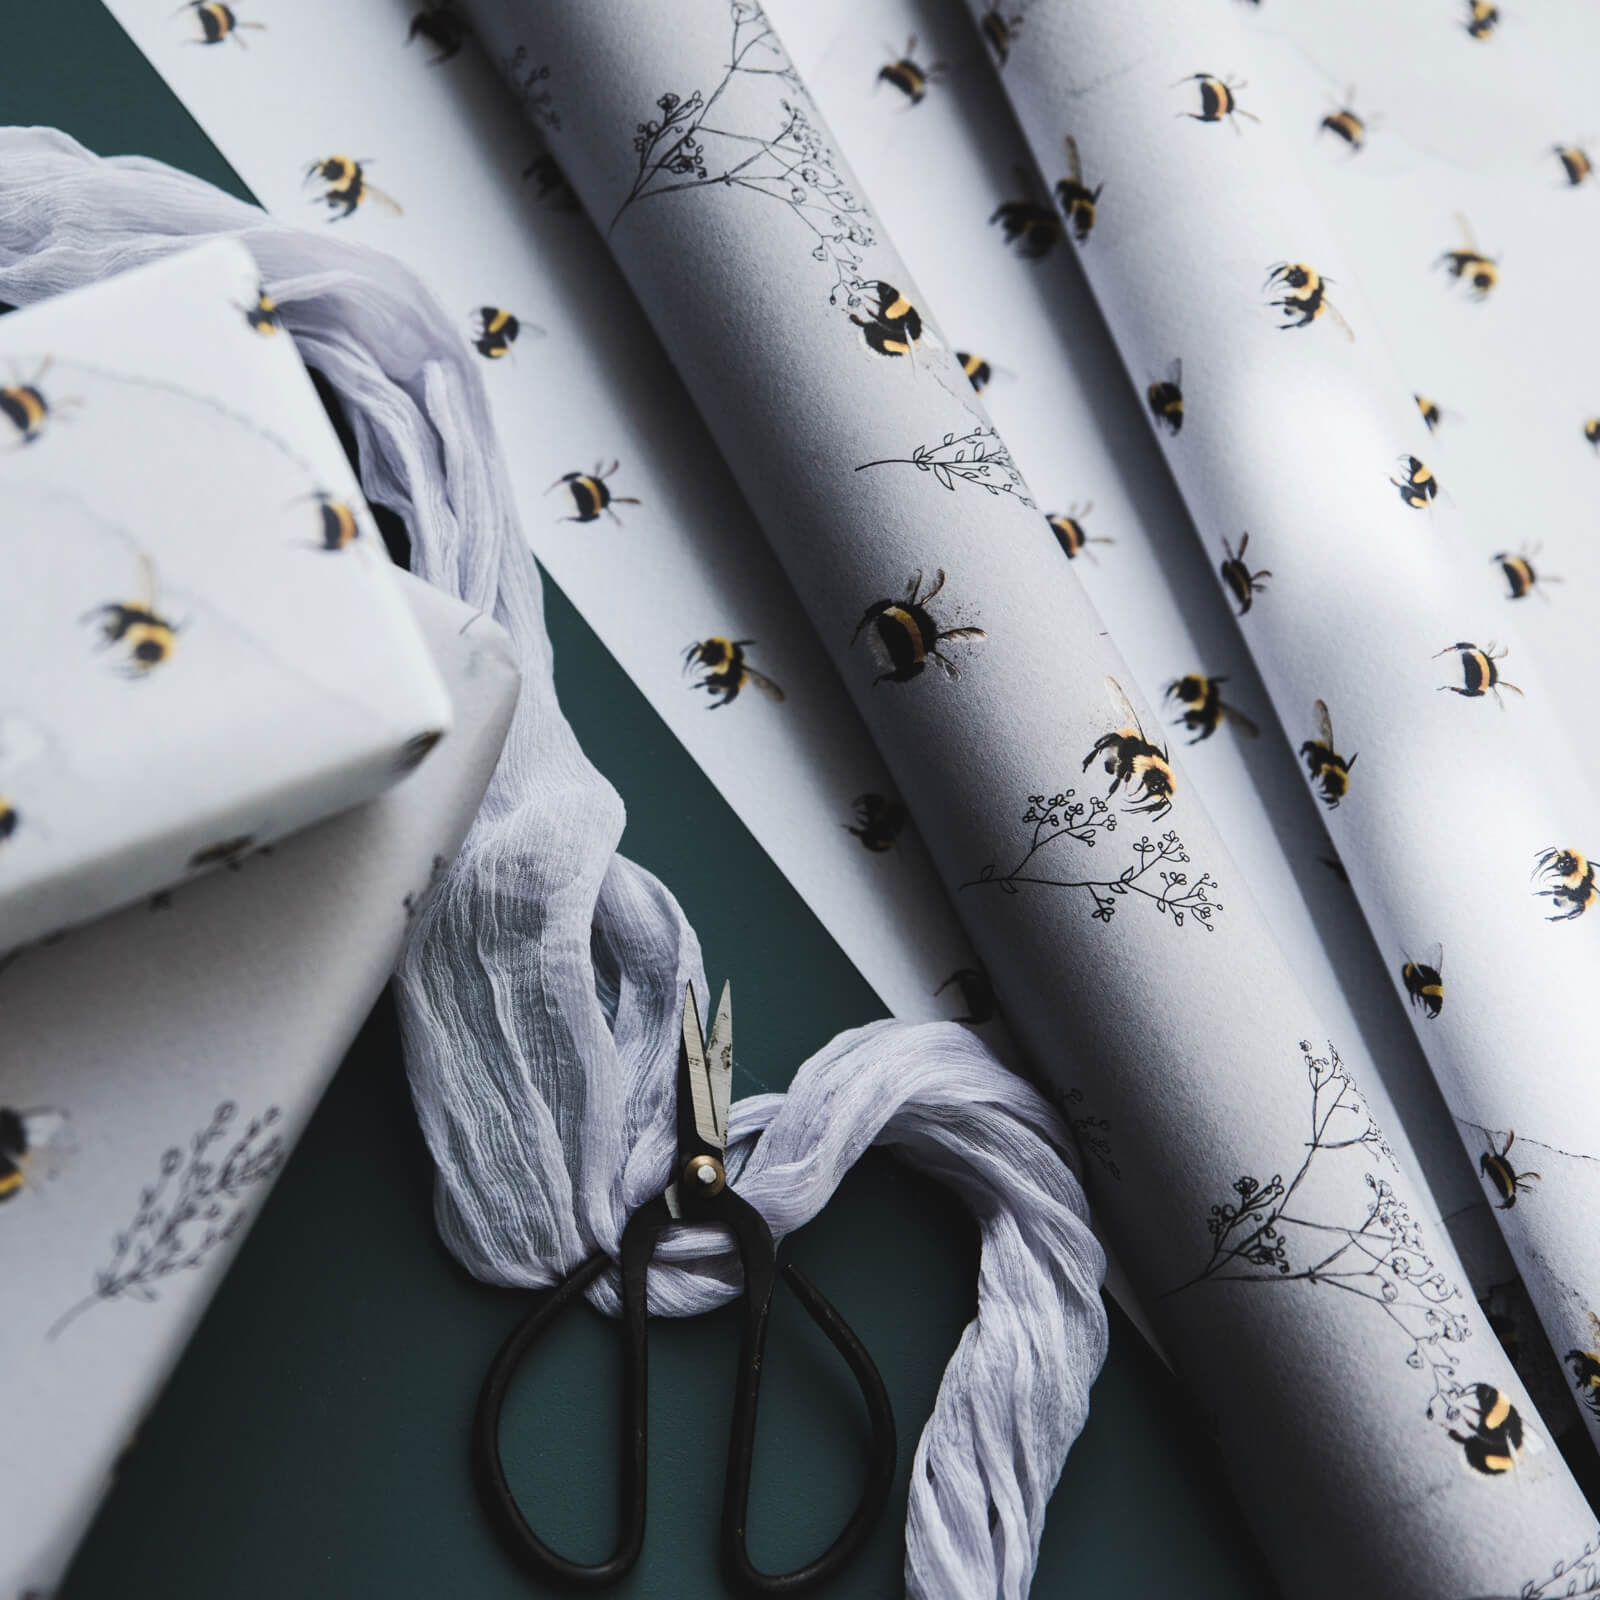 Watercolour Bumblebees Gift Wrap Set - I am Nat Ltd - Gift Wrap